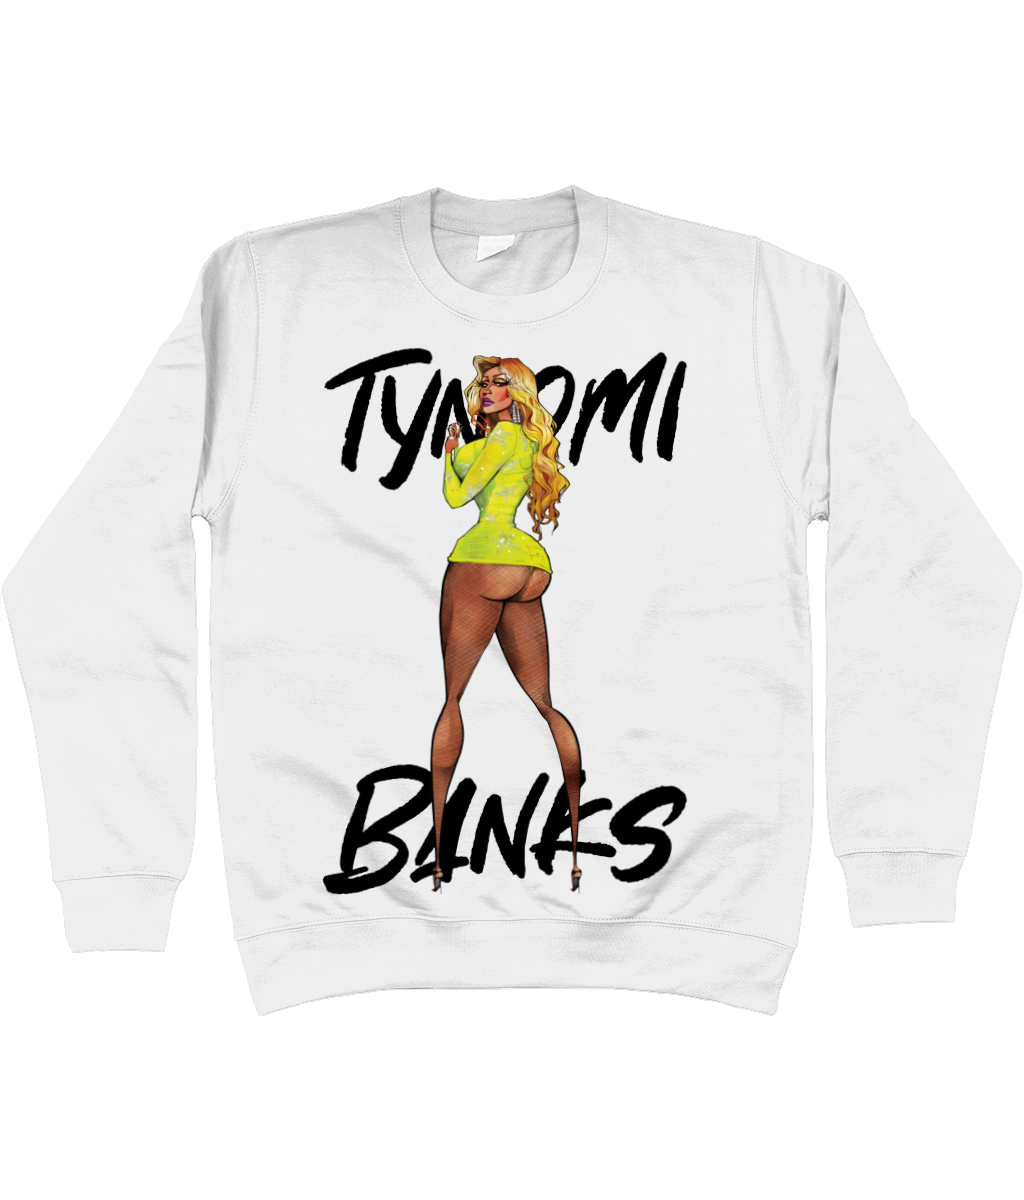 Tynomi Banks - Sweatshirt - SNATCHED MERCH